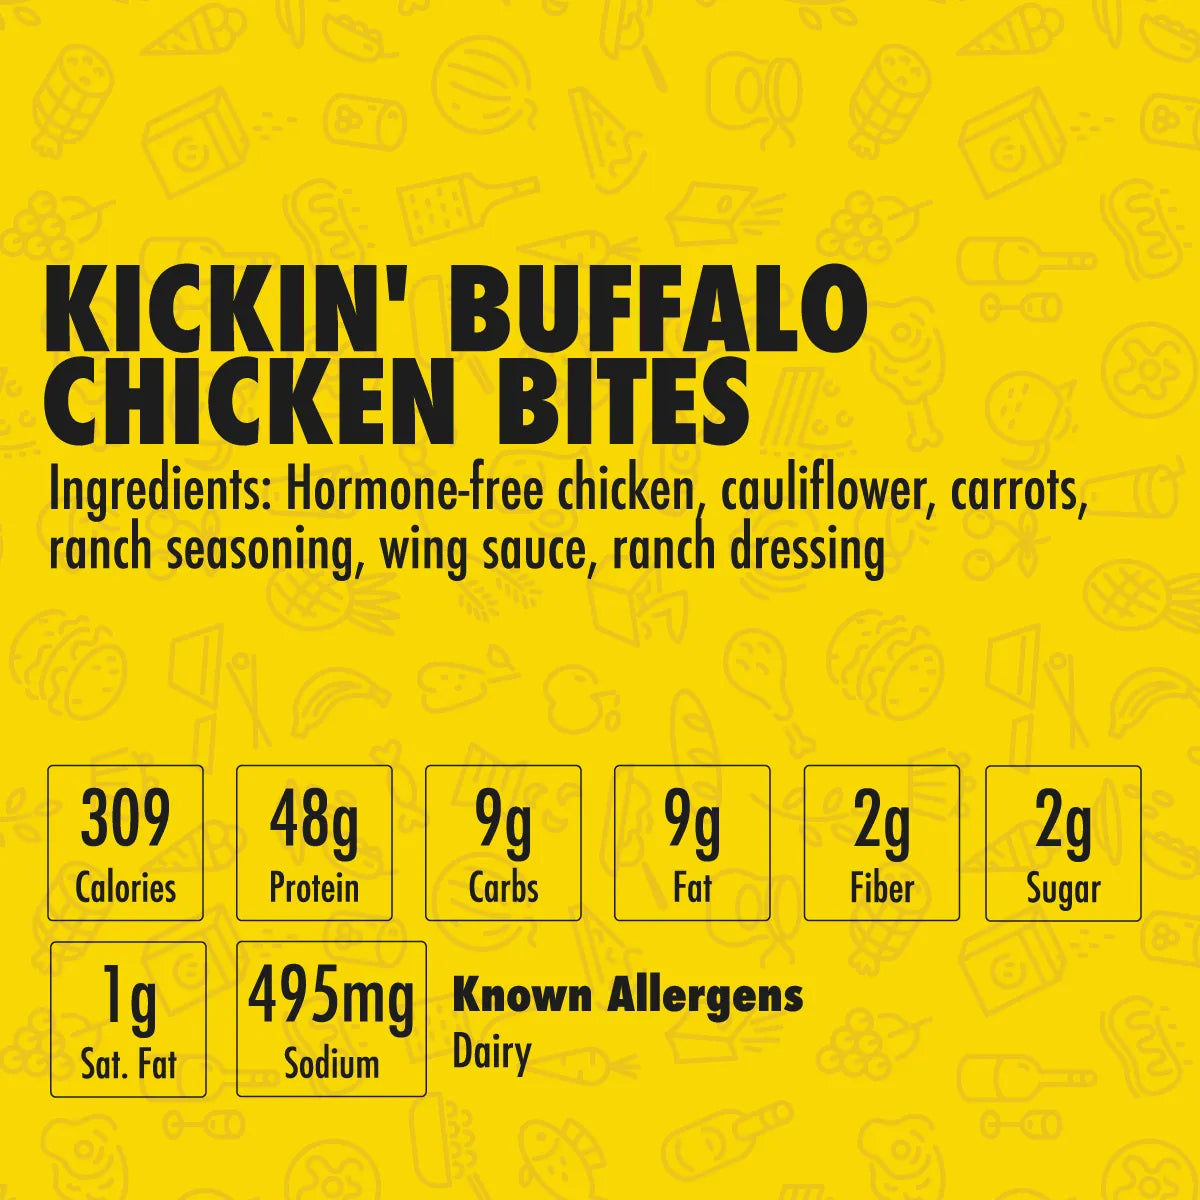 Kickin' Buffalo Chicken Bites